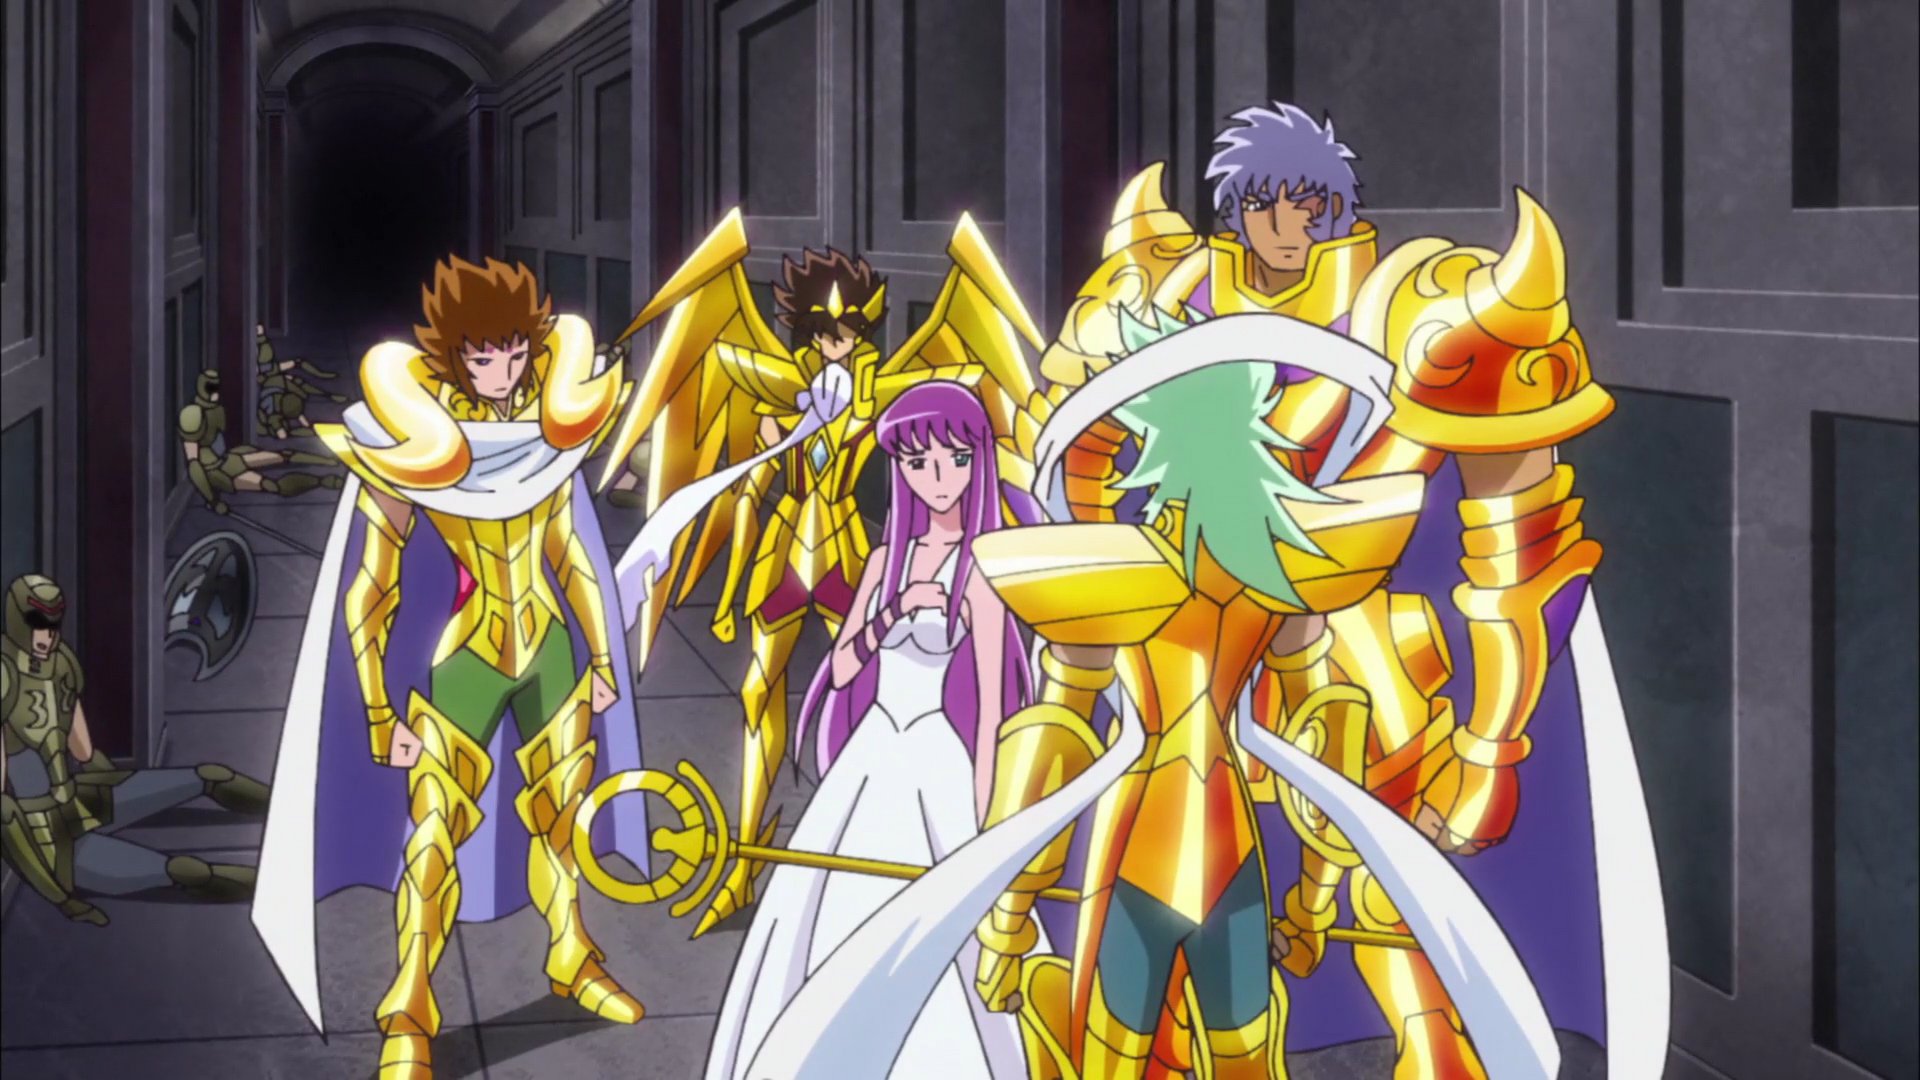 The Strongest Army! The Gold Saints Assemble! – Saint Seiya Omega (Season  1, Episode 28) - Apple TV (AU)